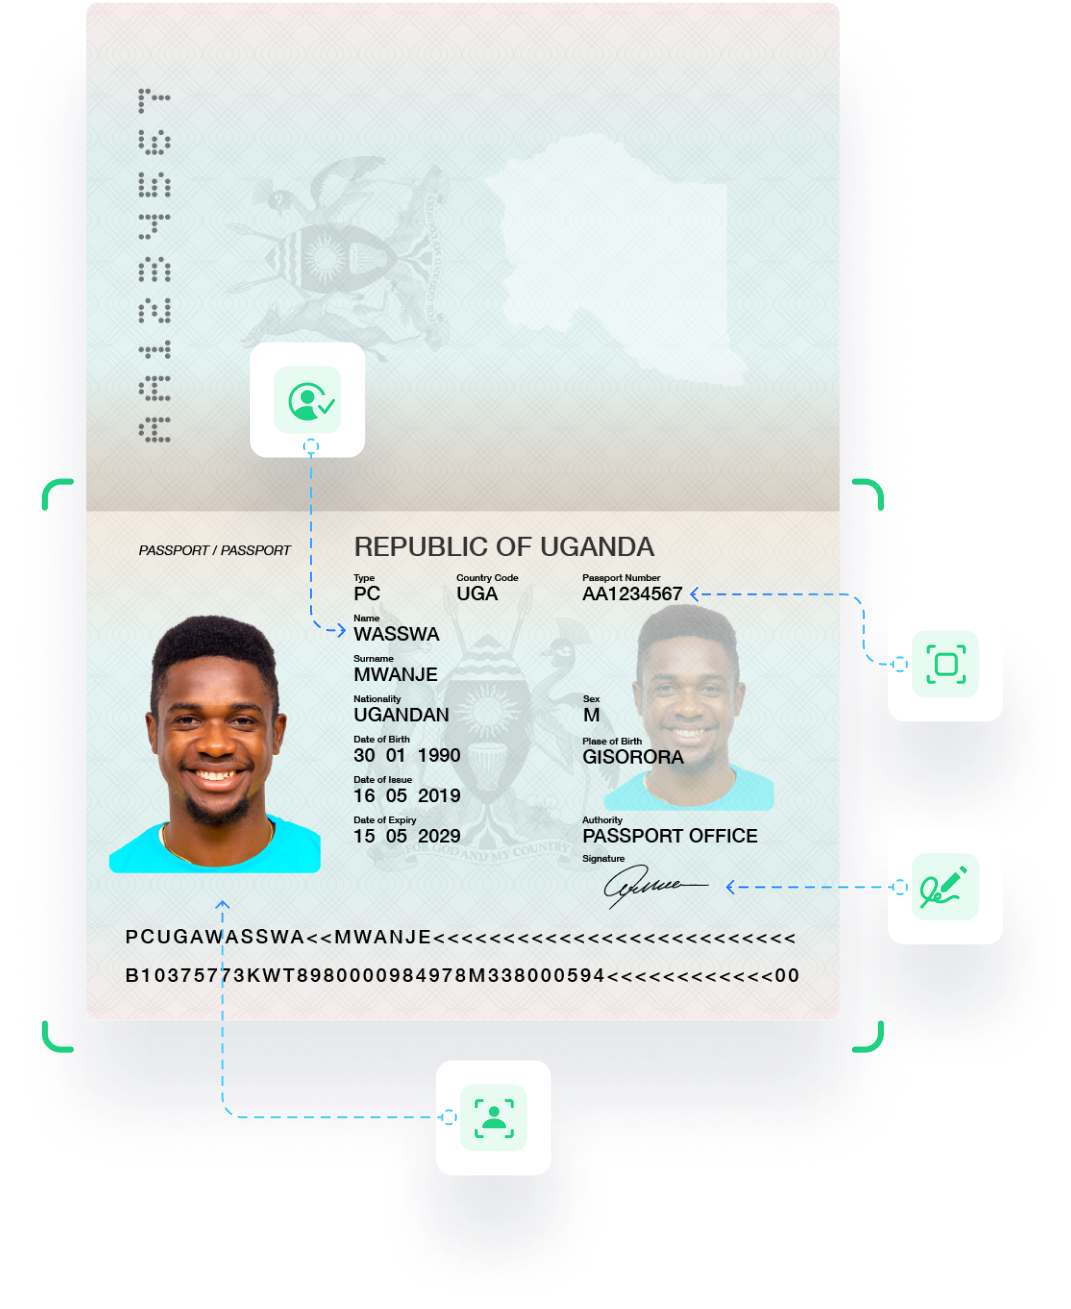 Passport digital identity verification company in Uganda